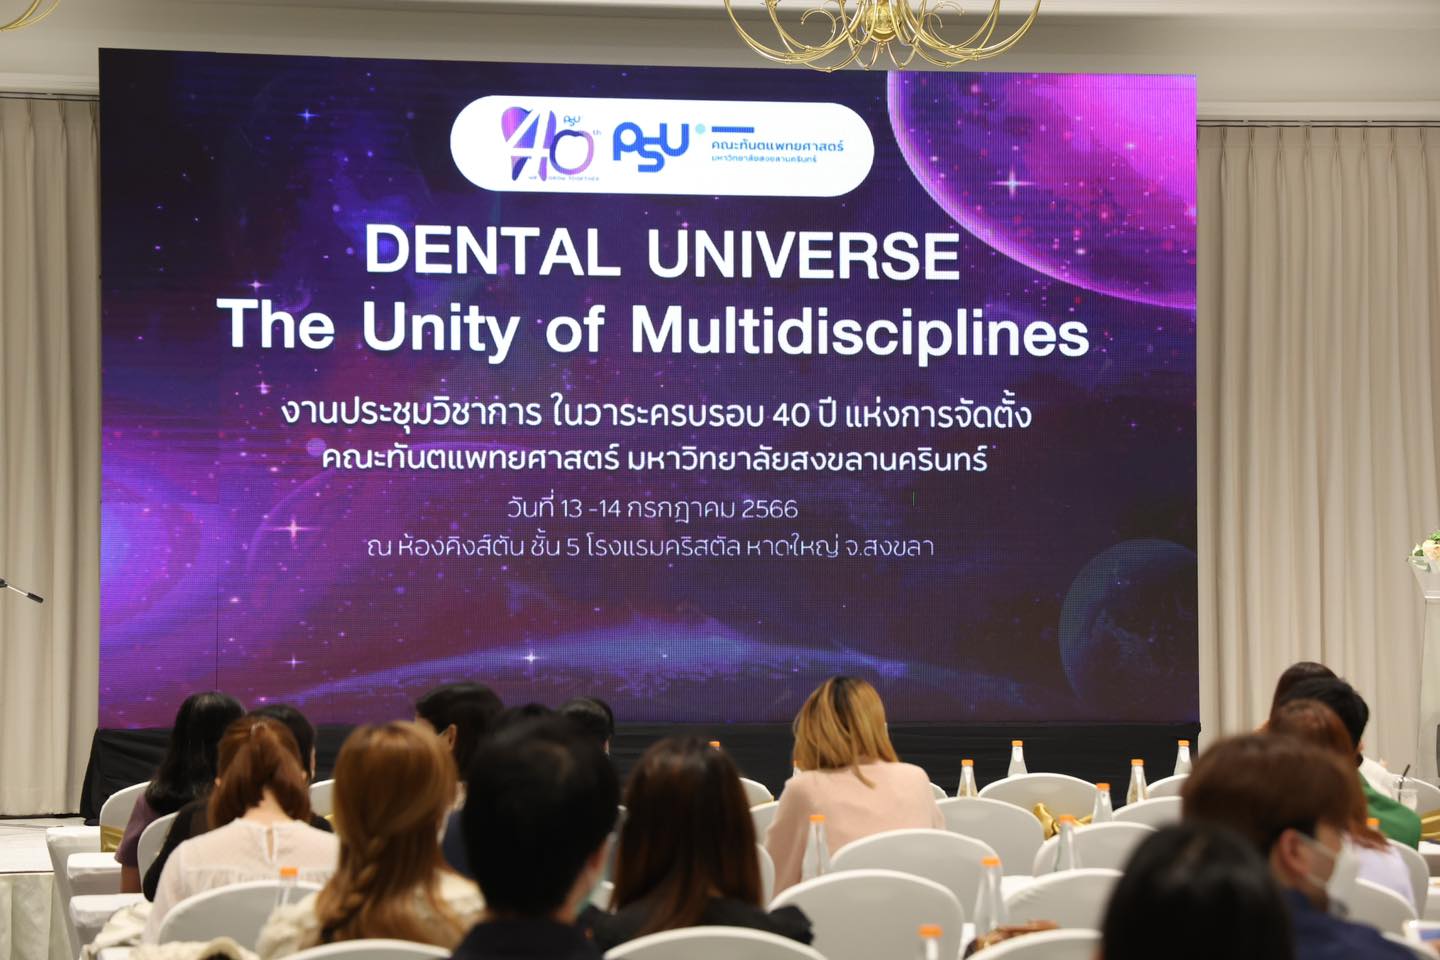 Dental Universe The Unity of Multidisciplines